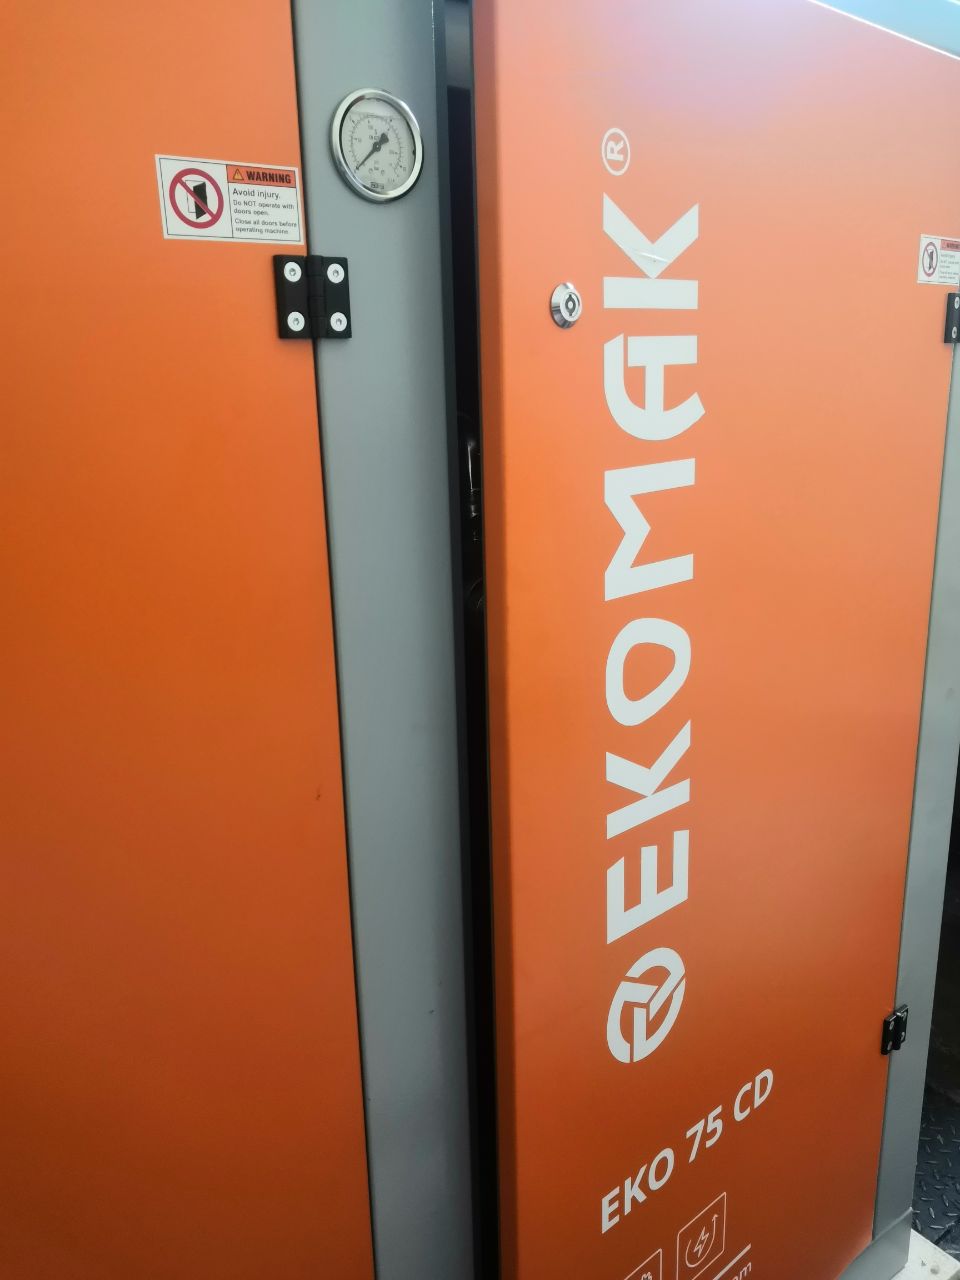 Поставка новой модели EKOMAK ЕКО75СD на одно из предприятий Санкт-Петербурга